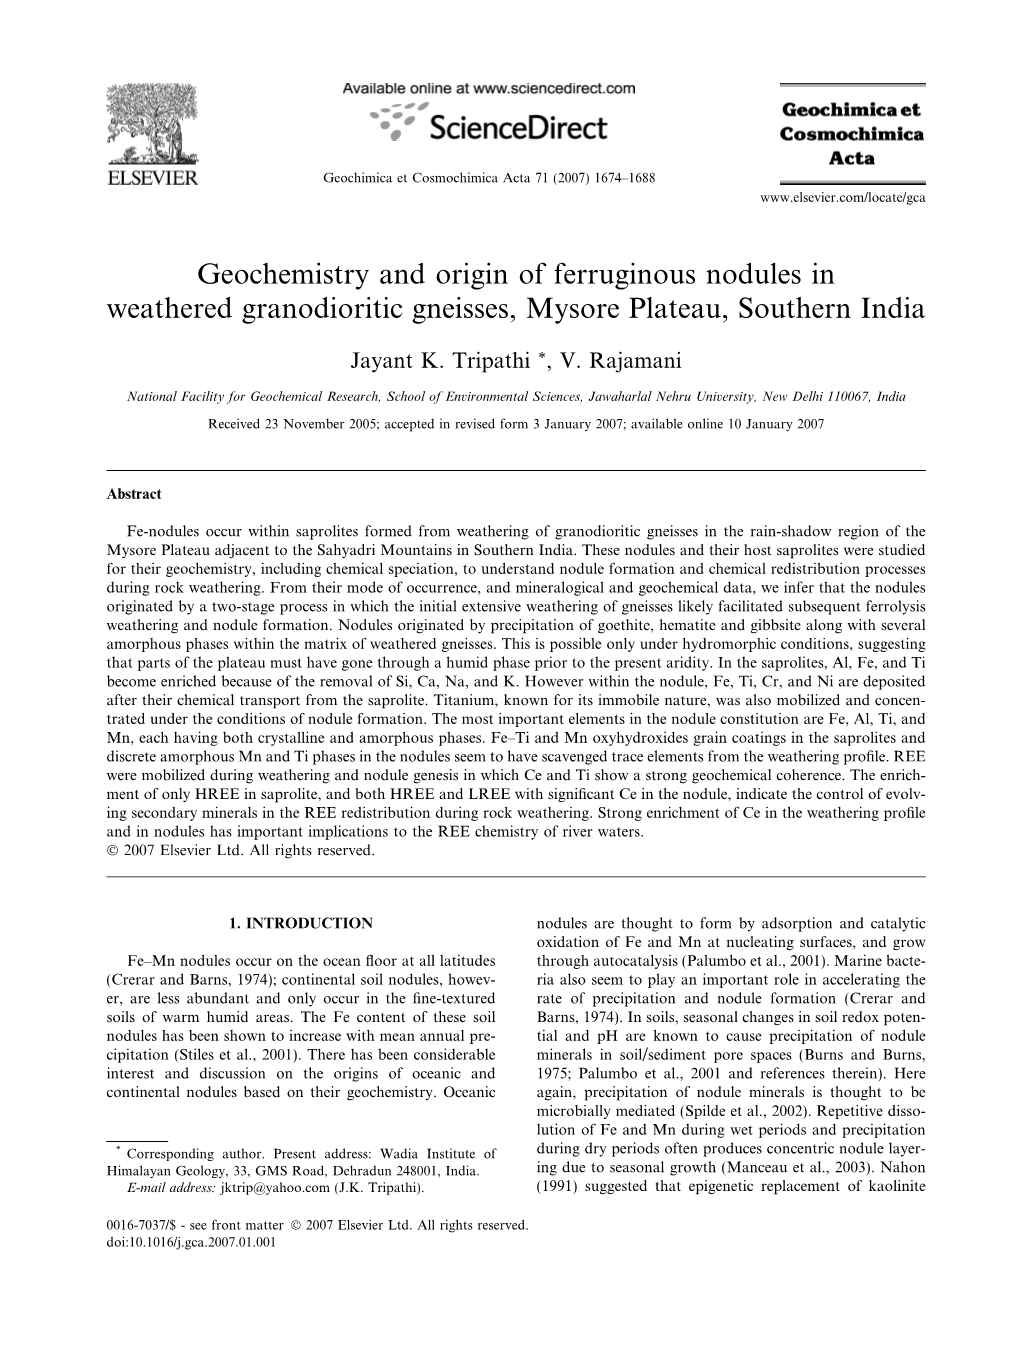 Geochemistry and Origin of Ferruginous Nodules in Weathered Granodioritic Gneisses, Mysore Plateau, Southern India